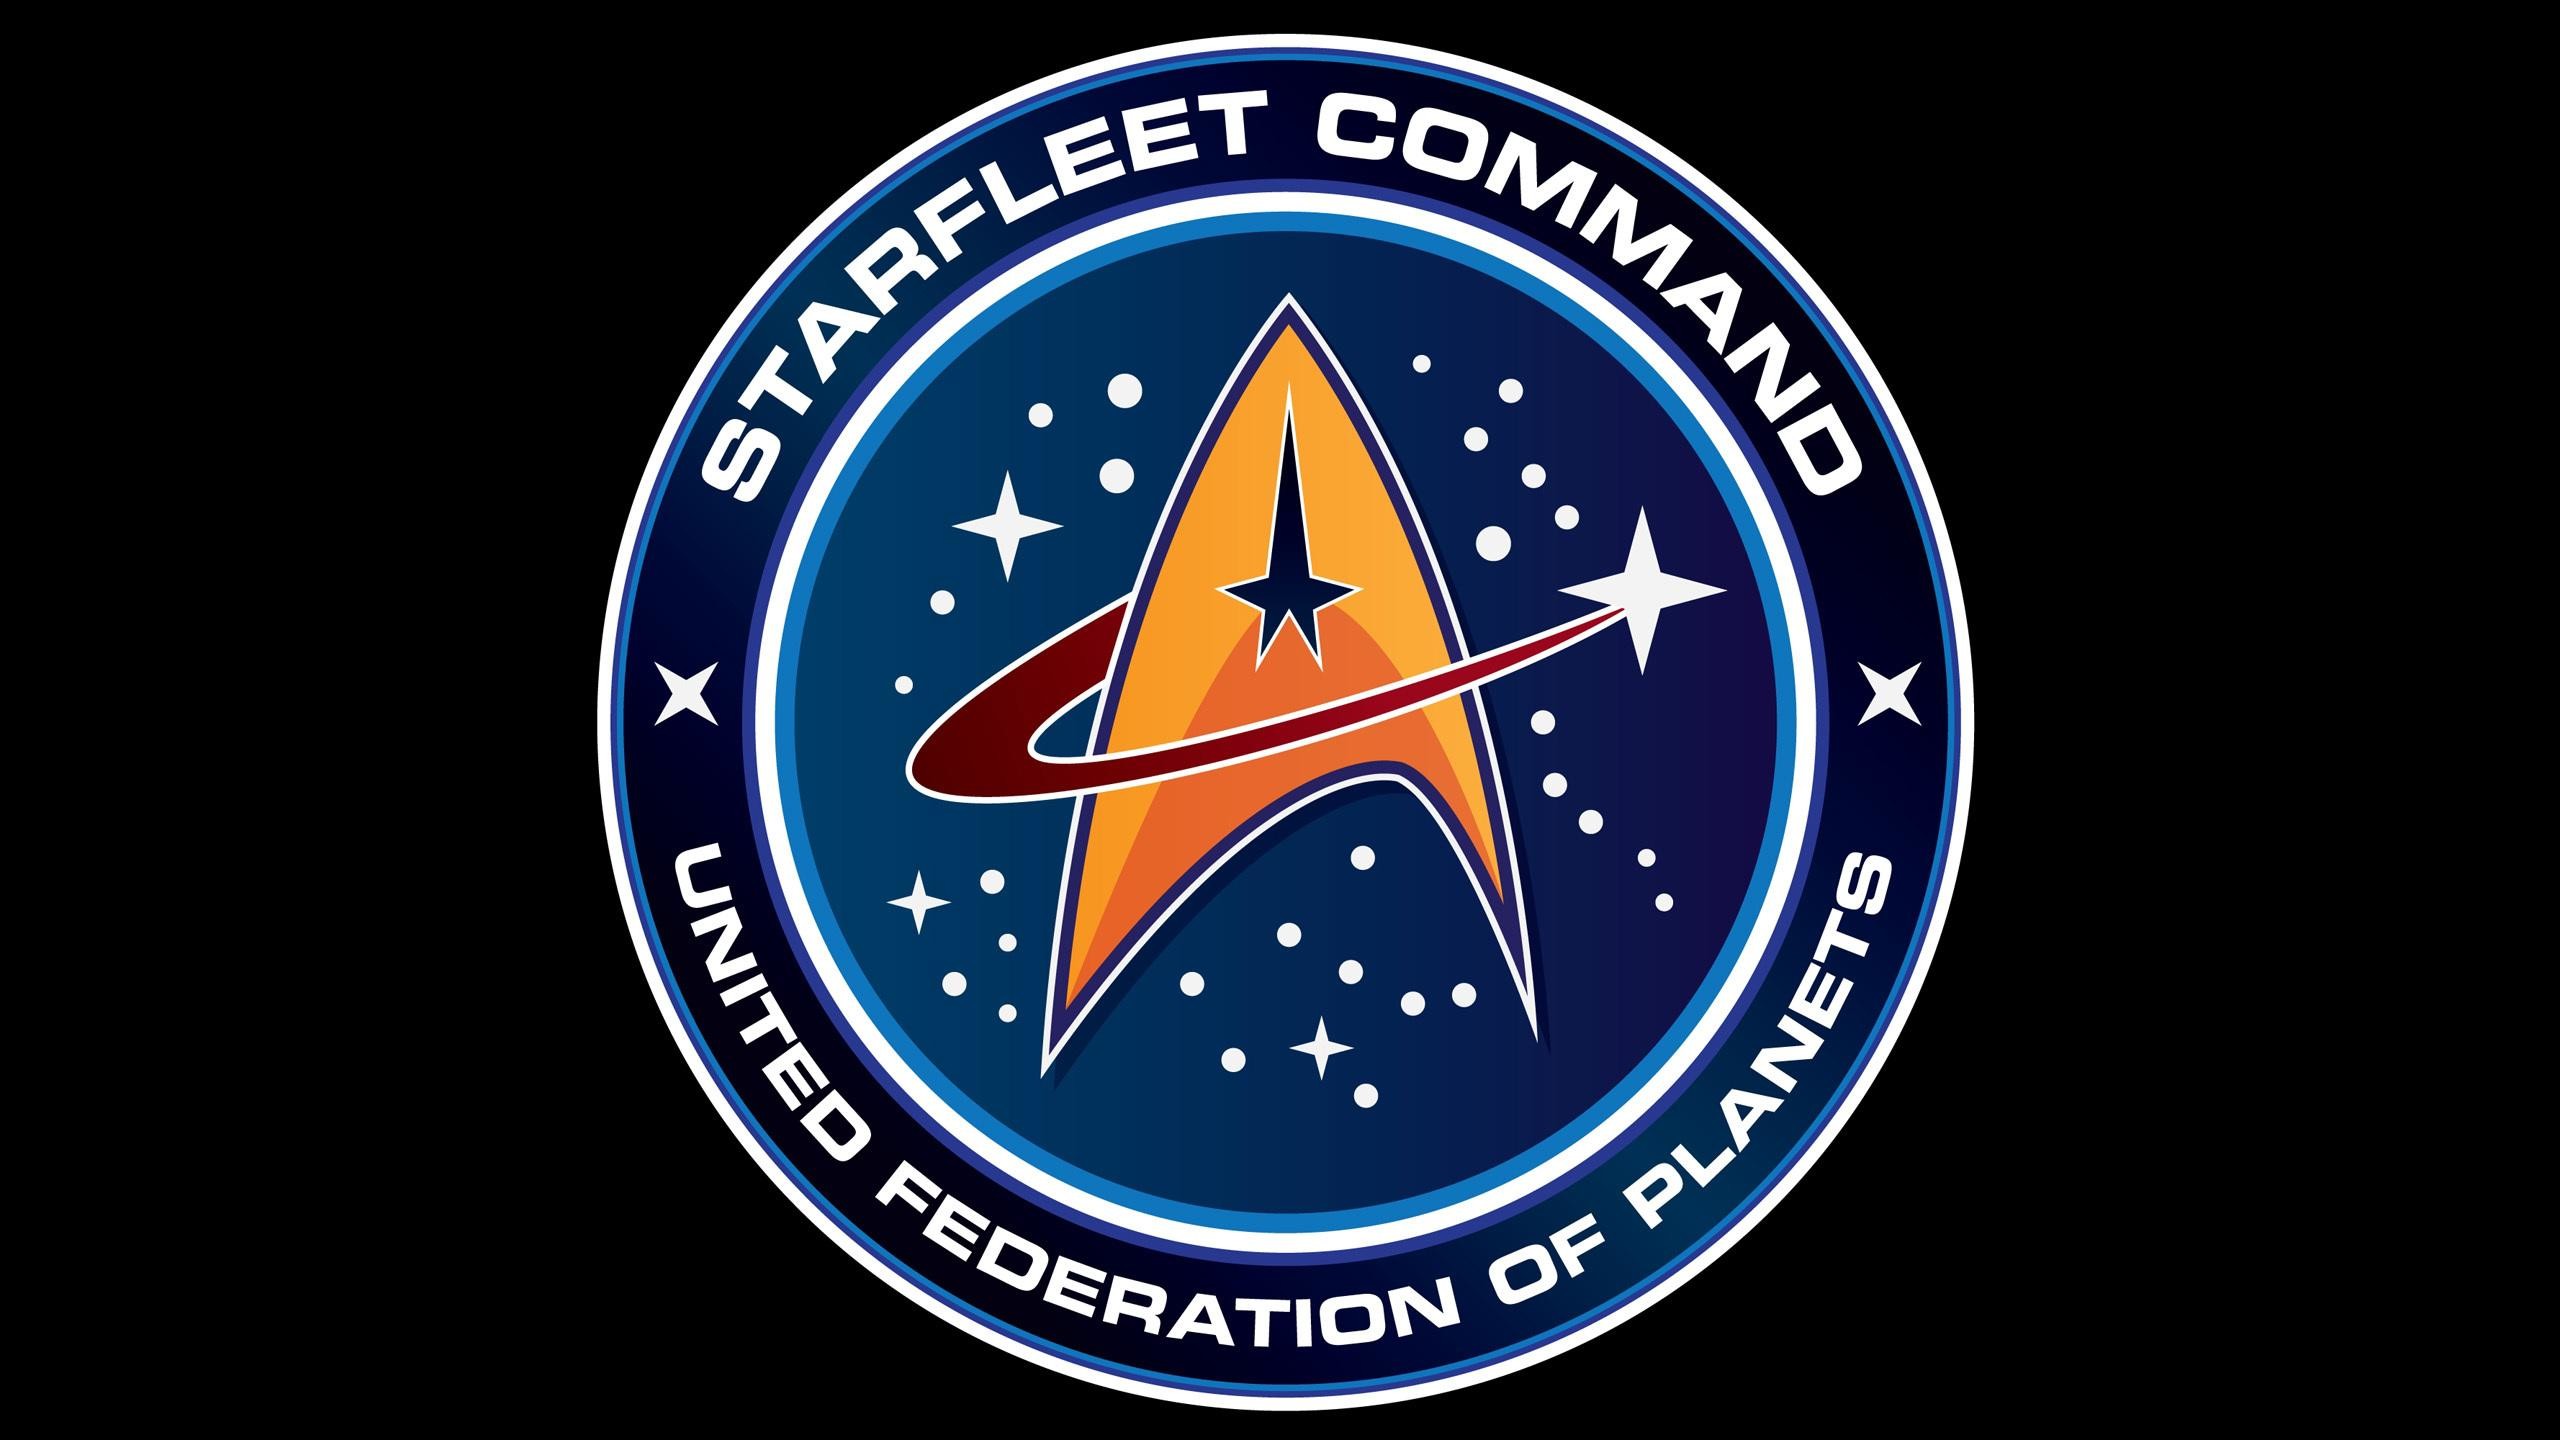 2560x1440 HD Starfleet Command in Star Trek Wallpaper | Download Free - 149226